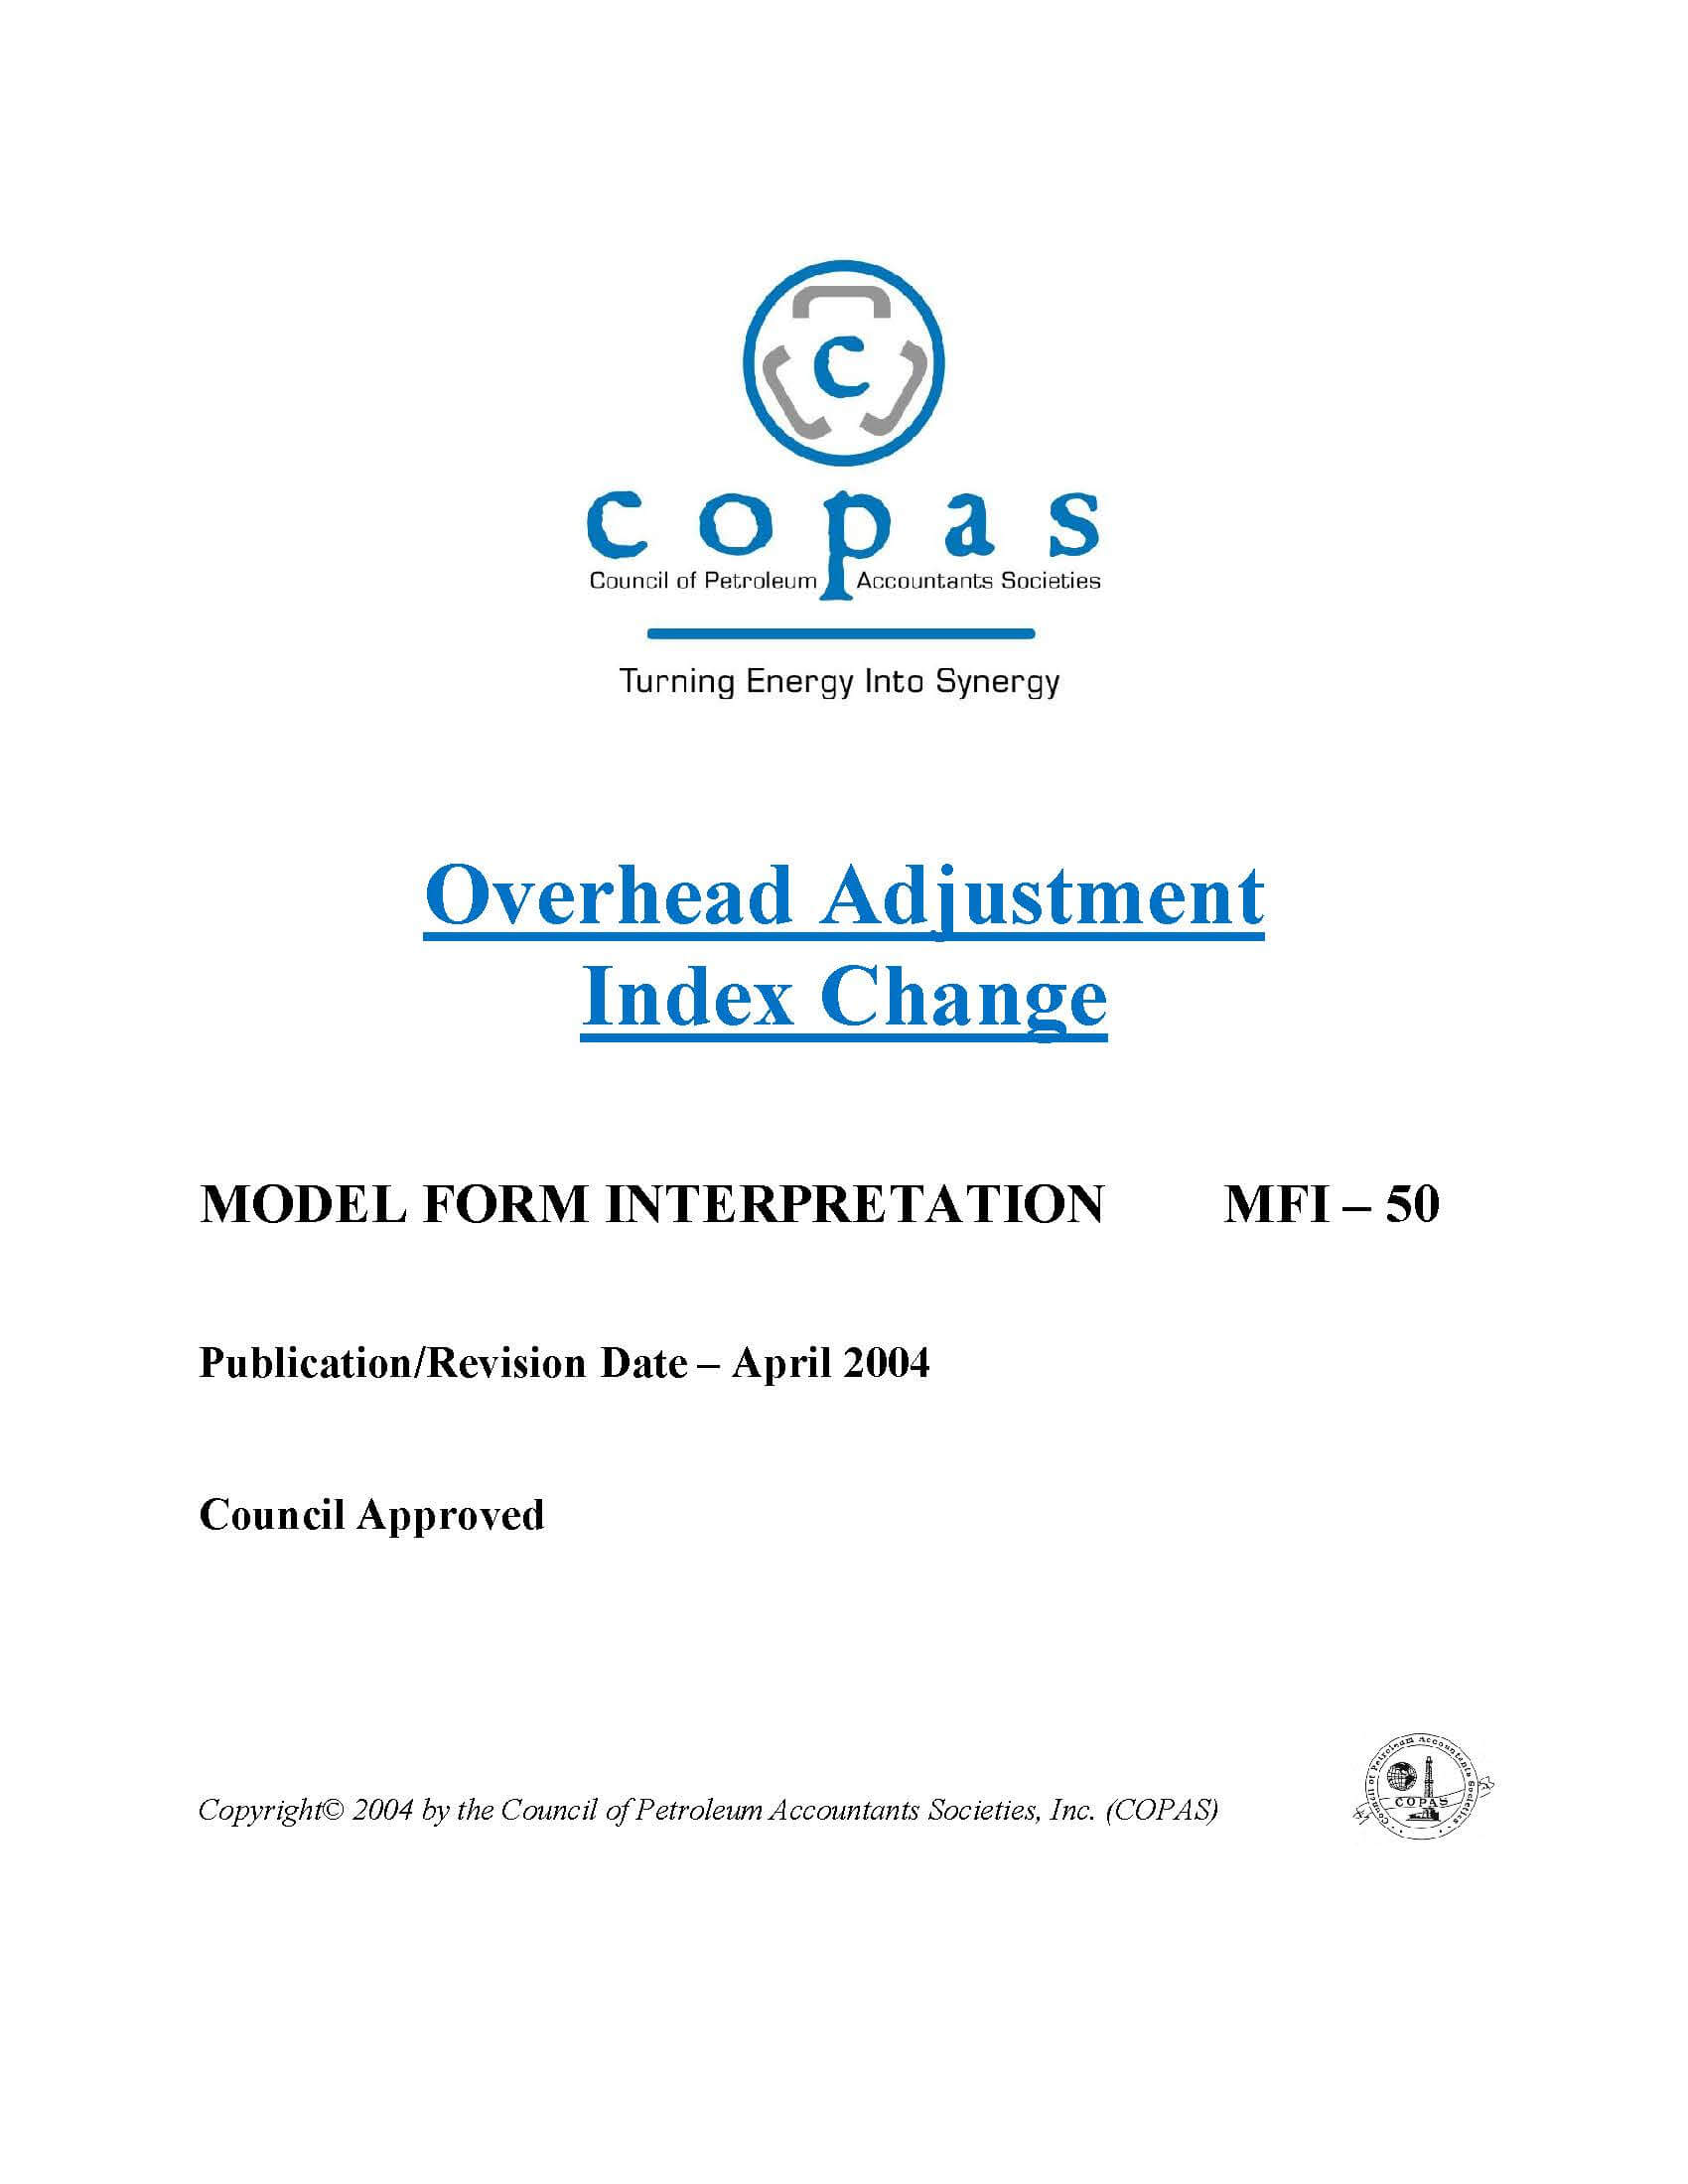 MFI-50 Overhead Adjustment Index Change - products MFI 50 Overhead Adjustment Index Change - Council of Petroleum Accountants Societies